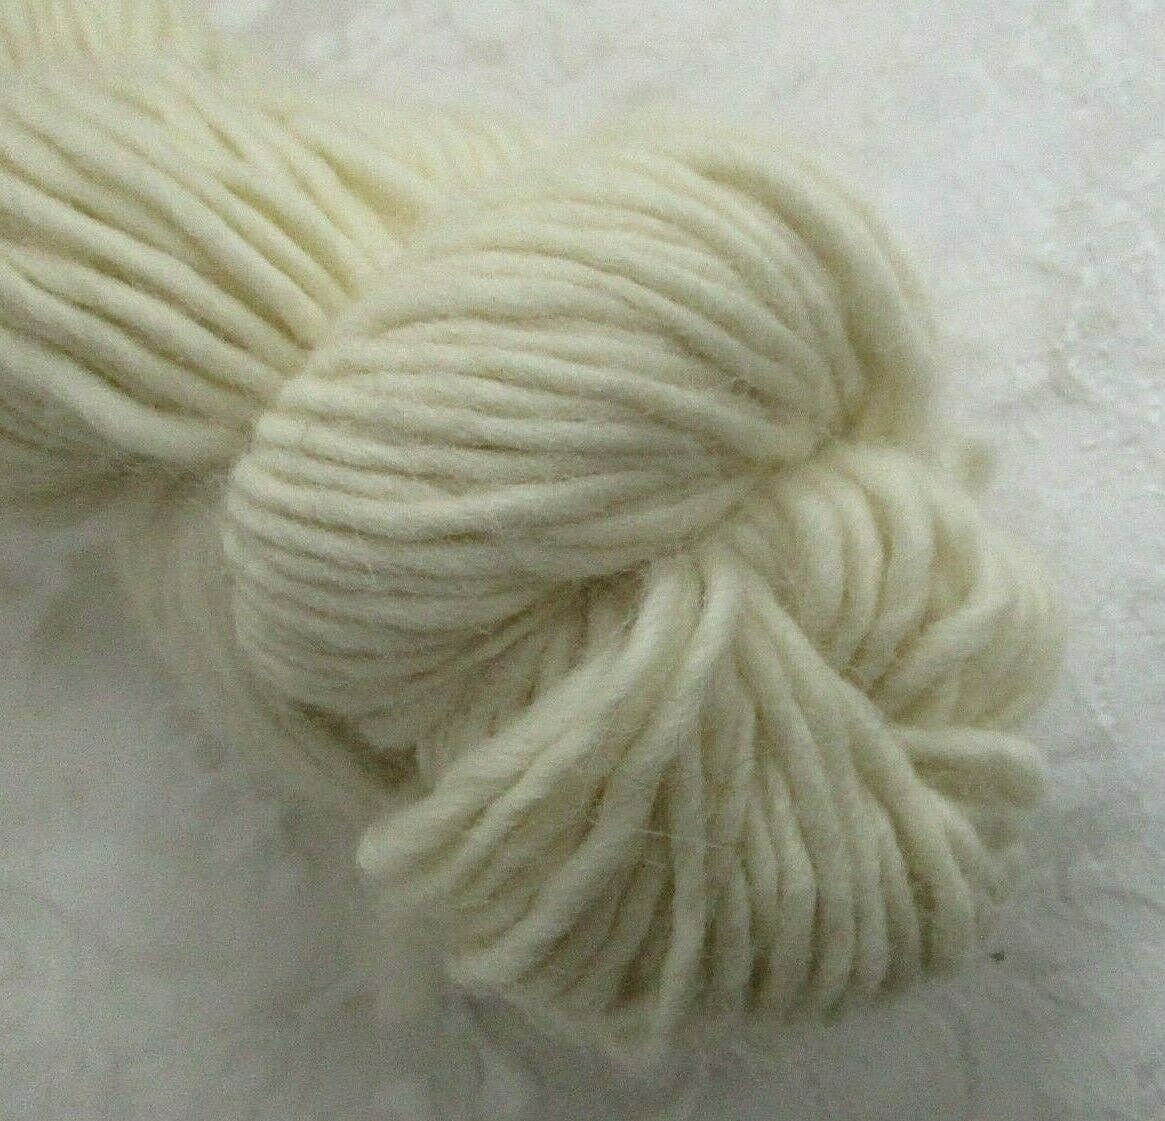 Kraemer Josephine Yarn Merino Wool Yarn Undyed Ready to Dye 175